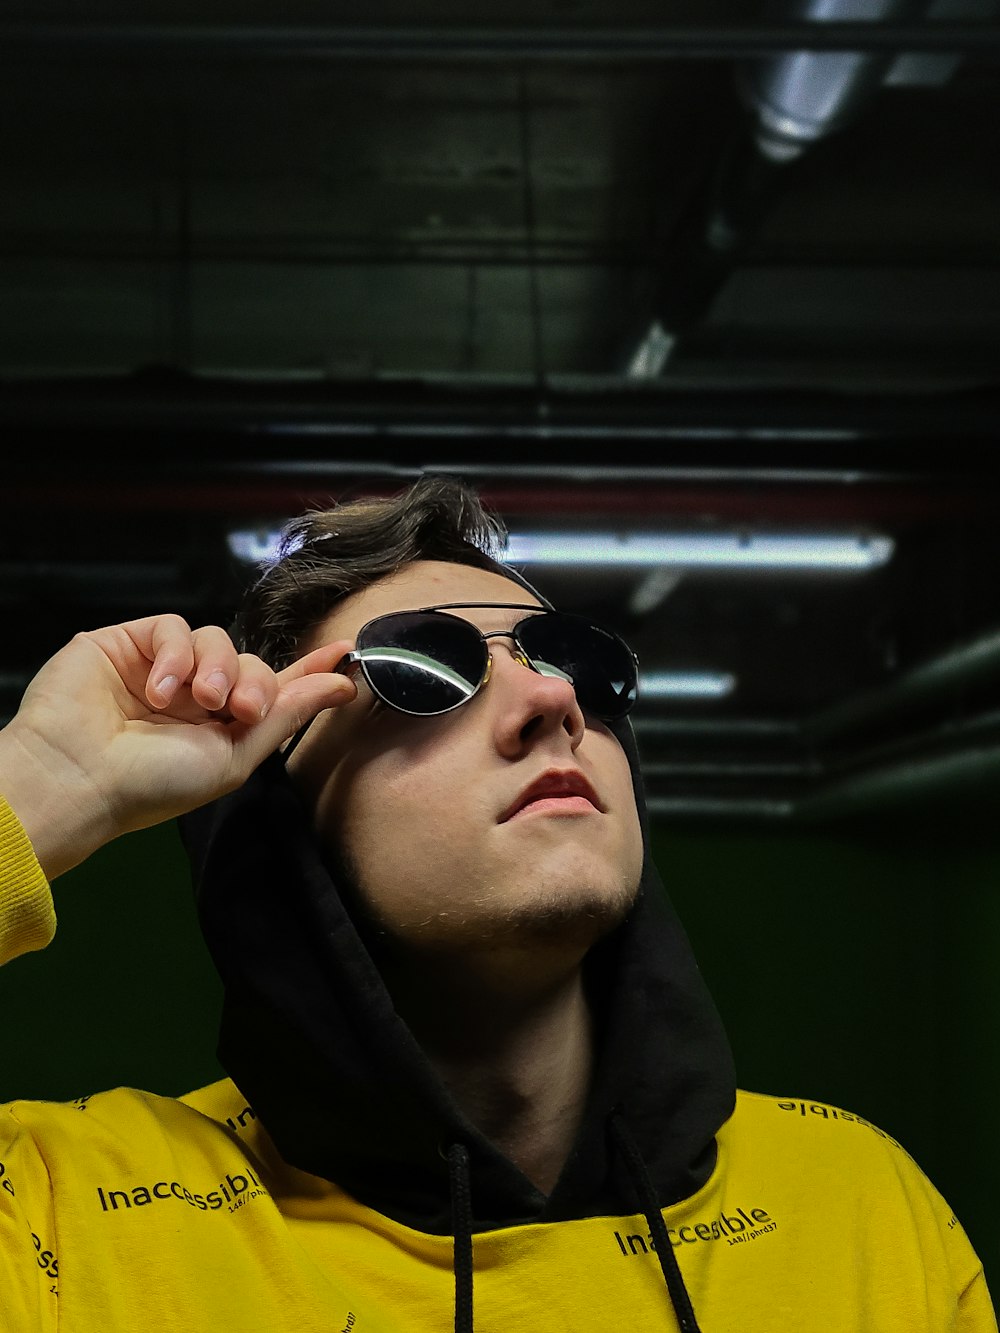 man in yellow jacket wearing black sunglasses